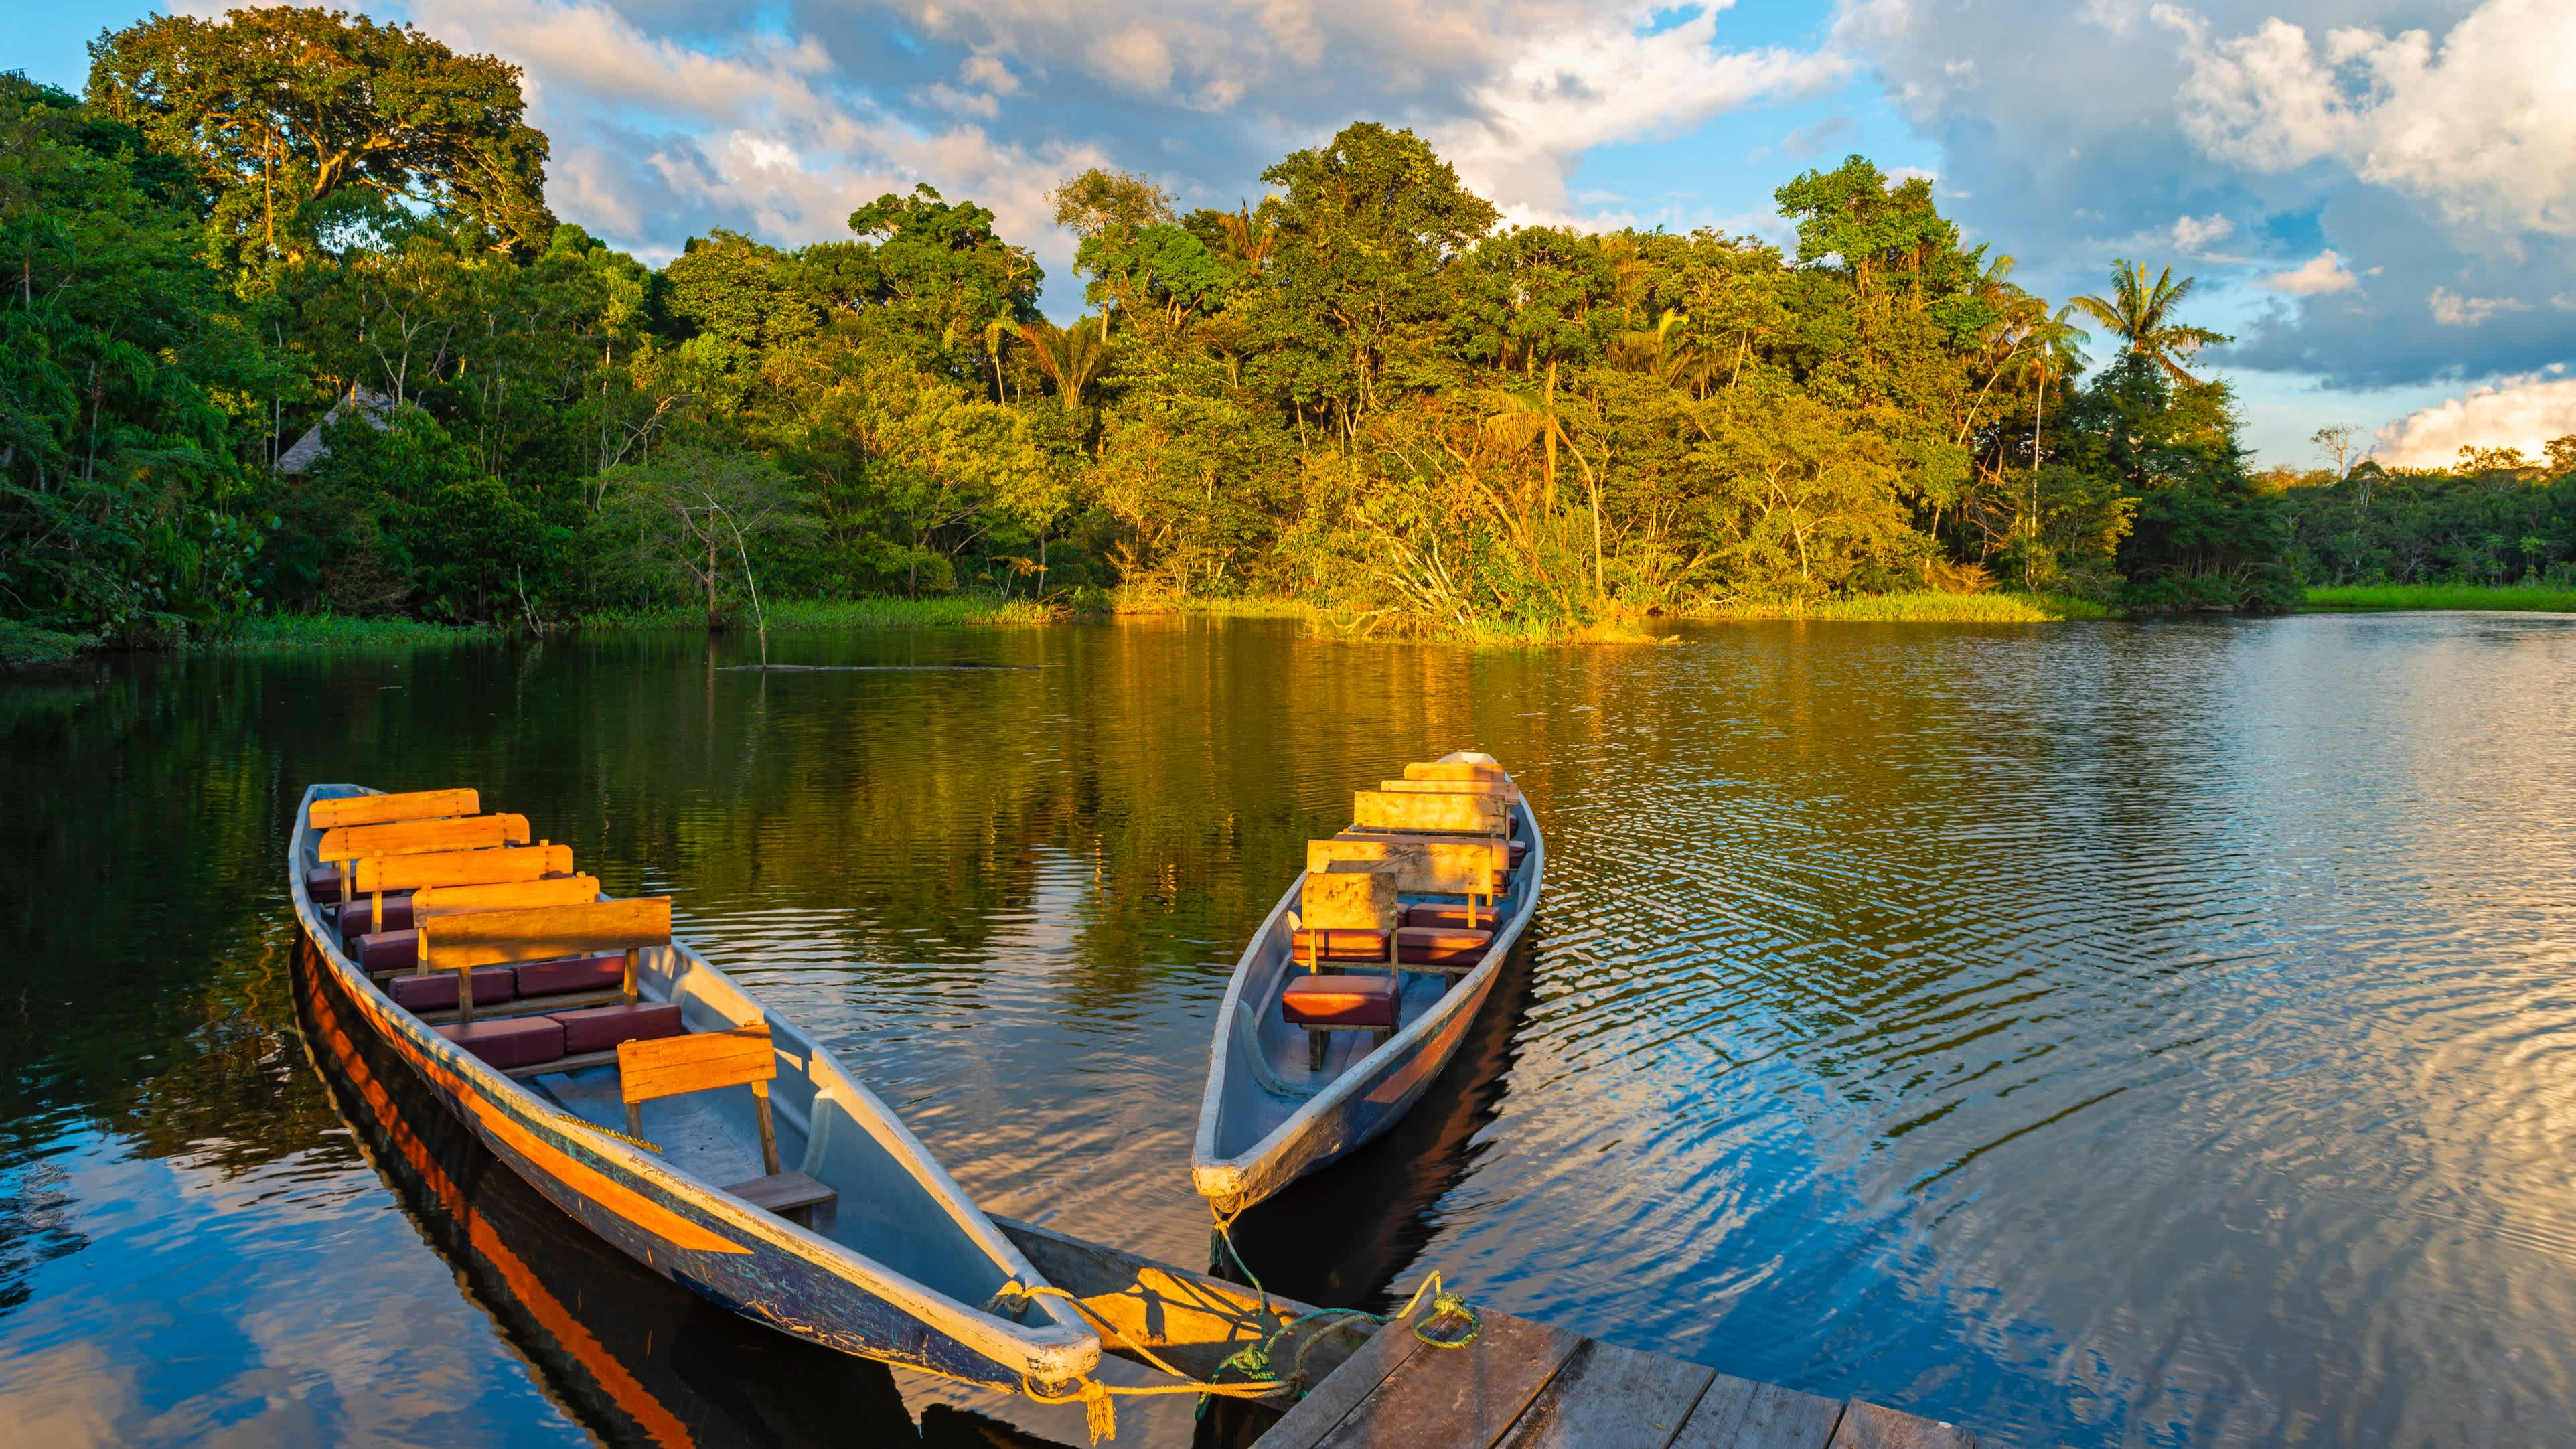 Kanus bei Sonnenuntergang im Amazonas-Regenwald